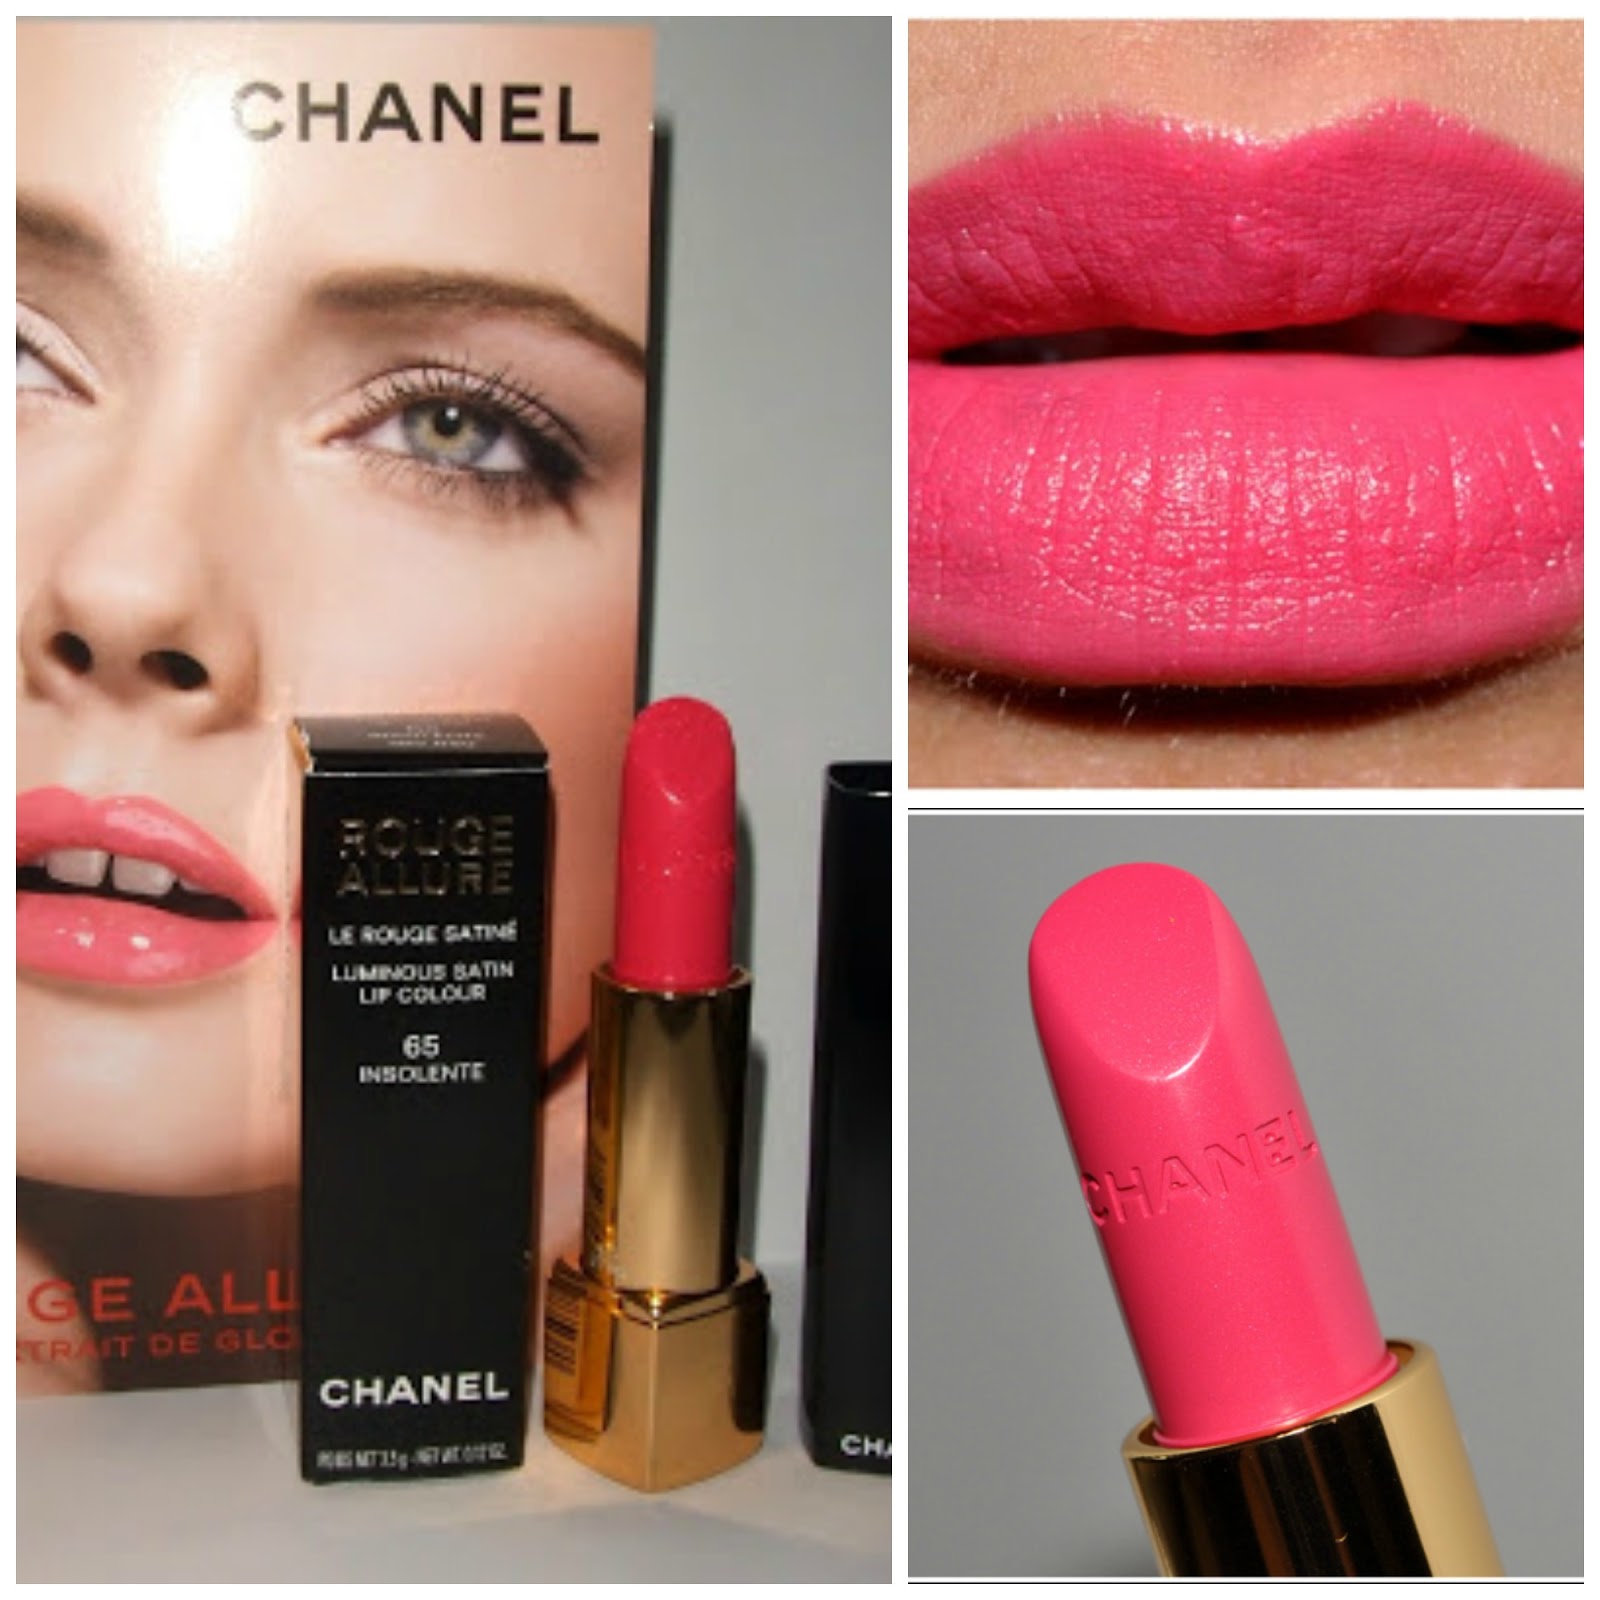 Chanel Insolente (65) Rouge Allure Lipstick Review, Photos